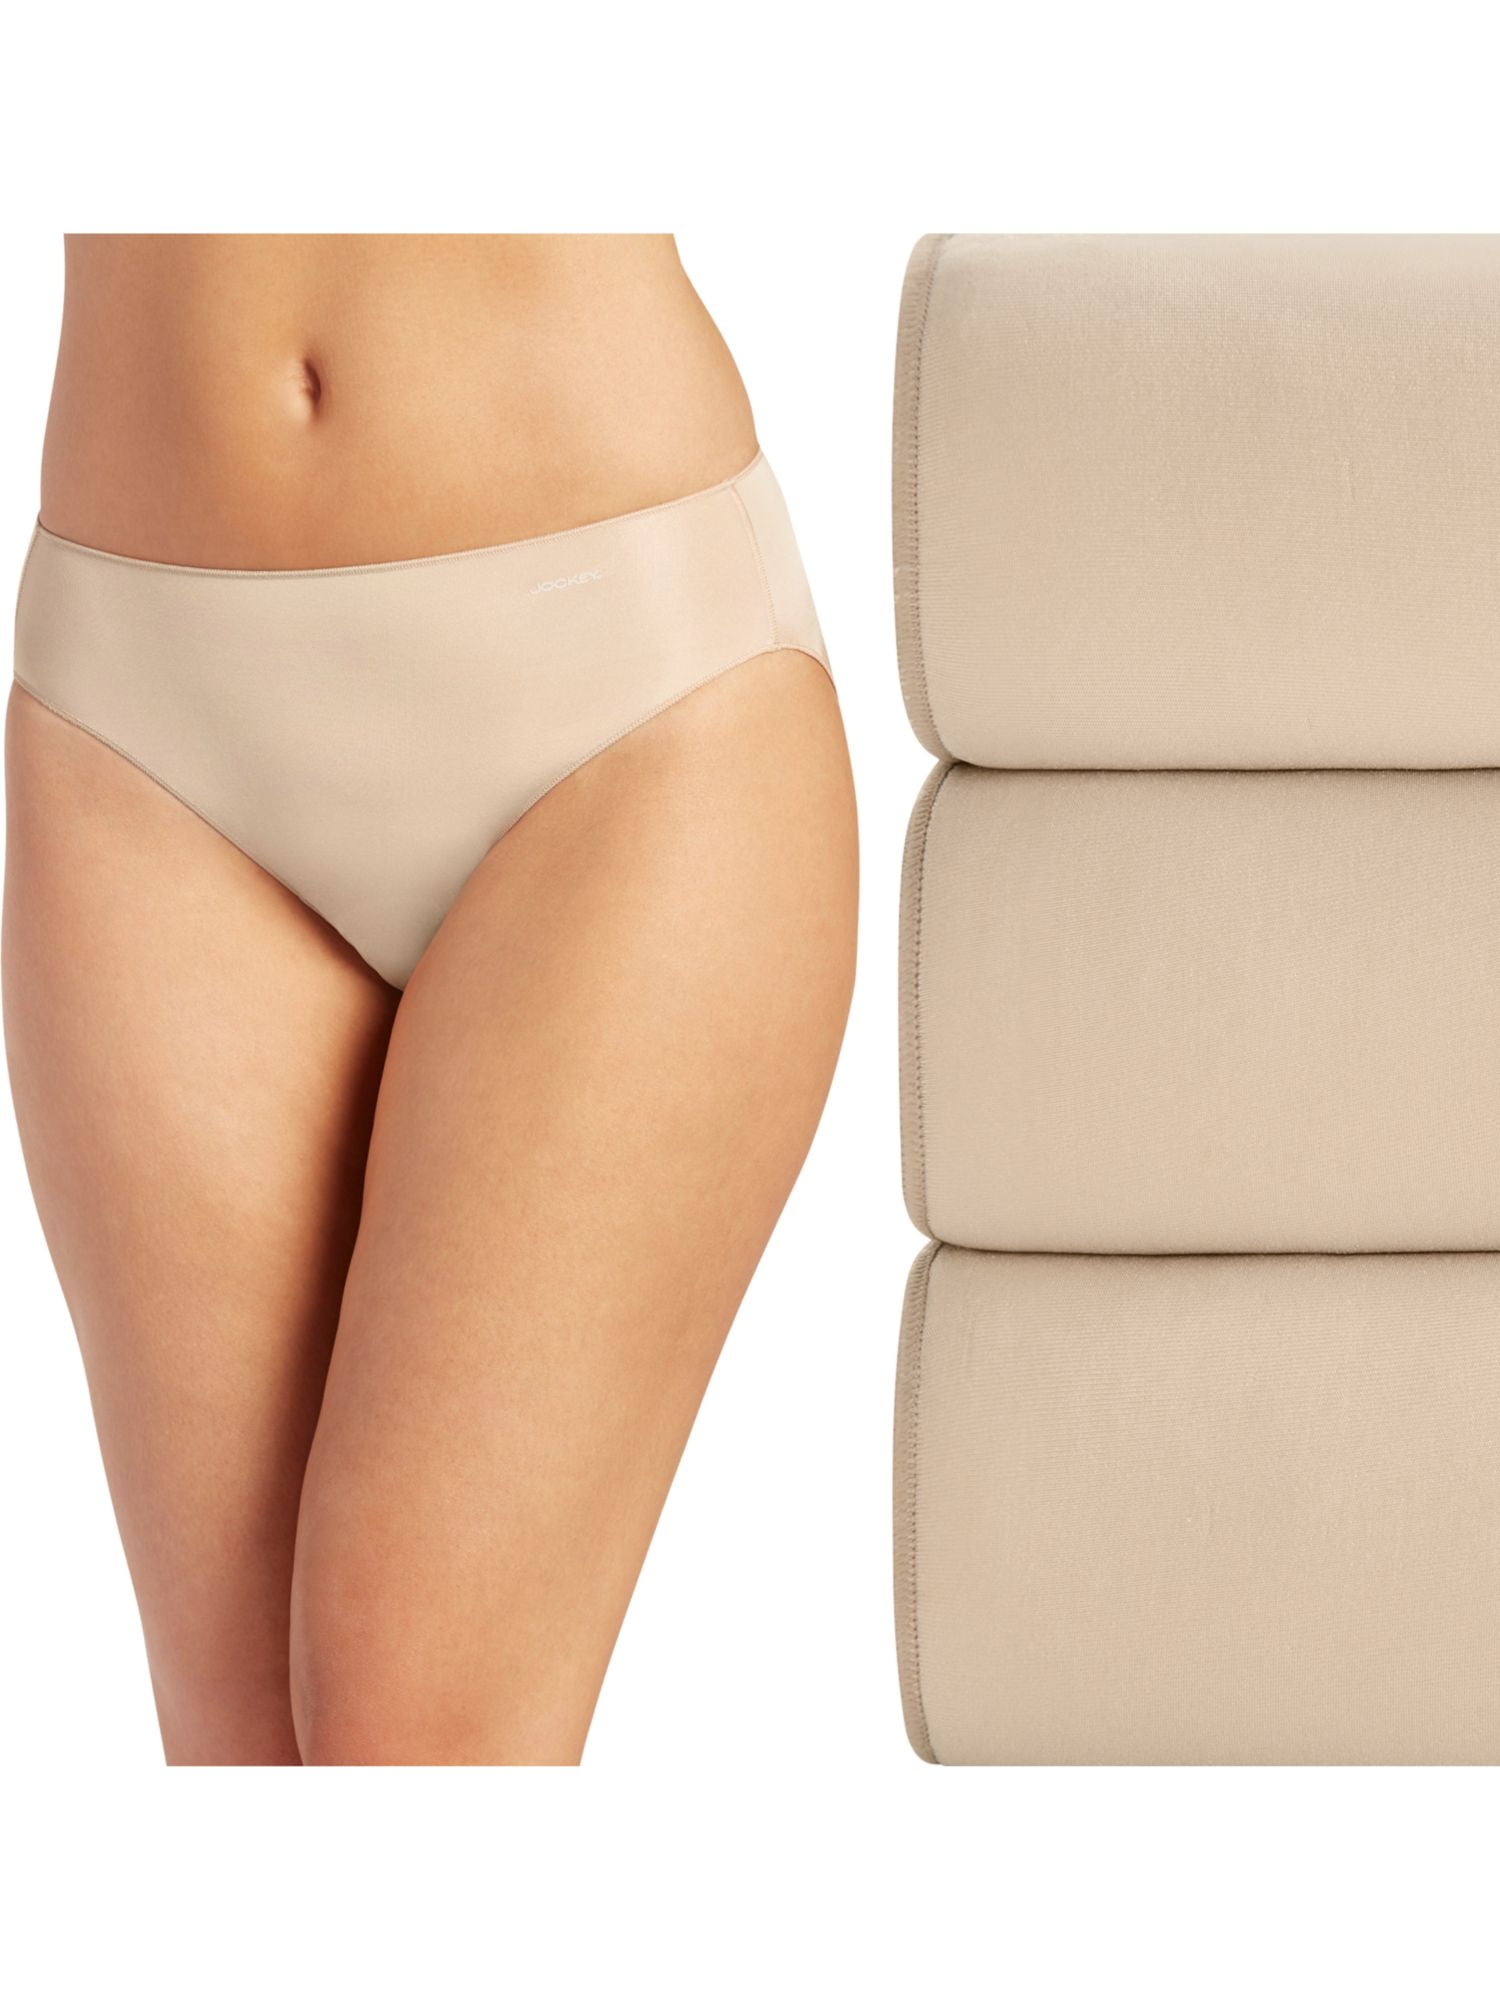 Jockey® Essentials Women's Soft Touch Seamfree® Eco Thong Panties, 3 Pack,  Sizes S-XXXL 